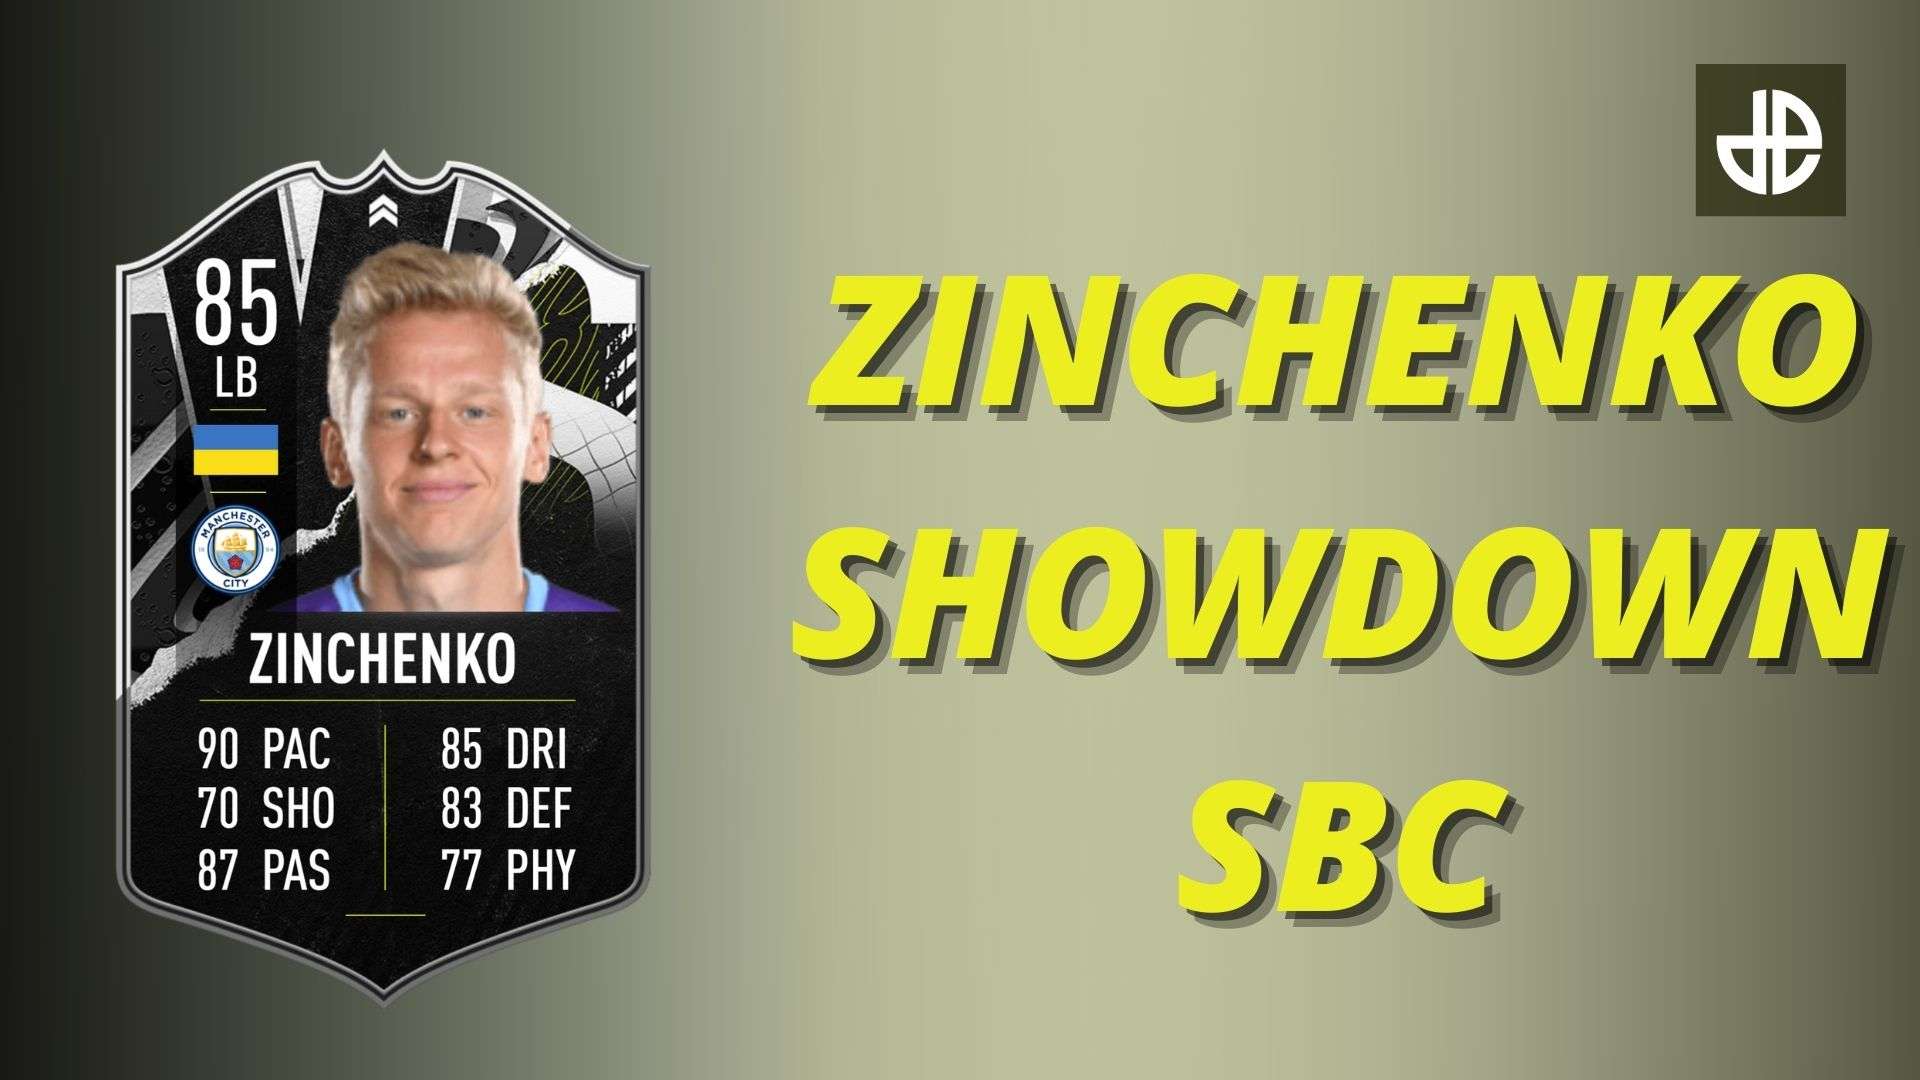 Zinchenko showdown SBC card in FIFA 21